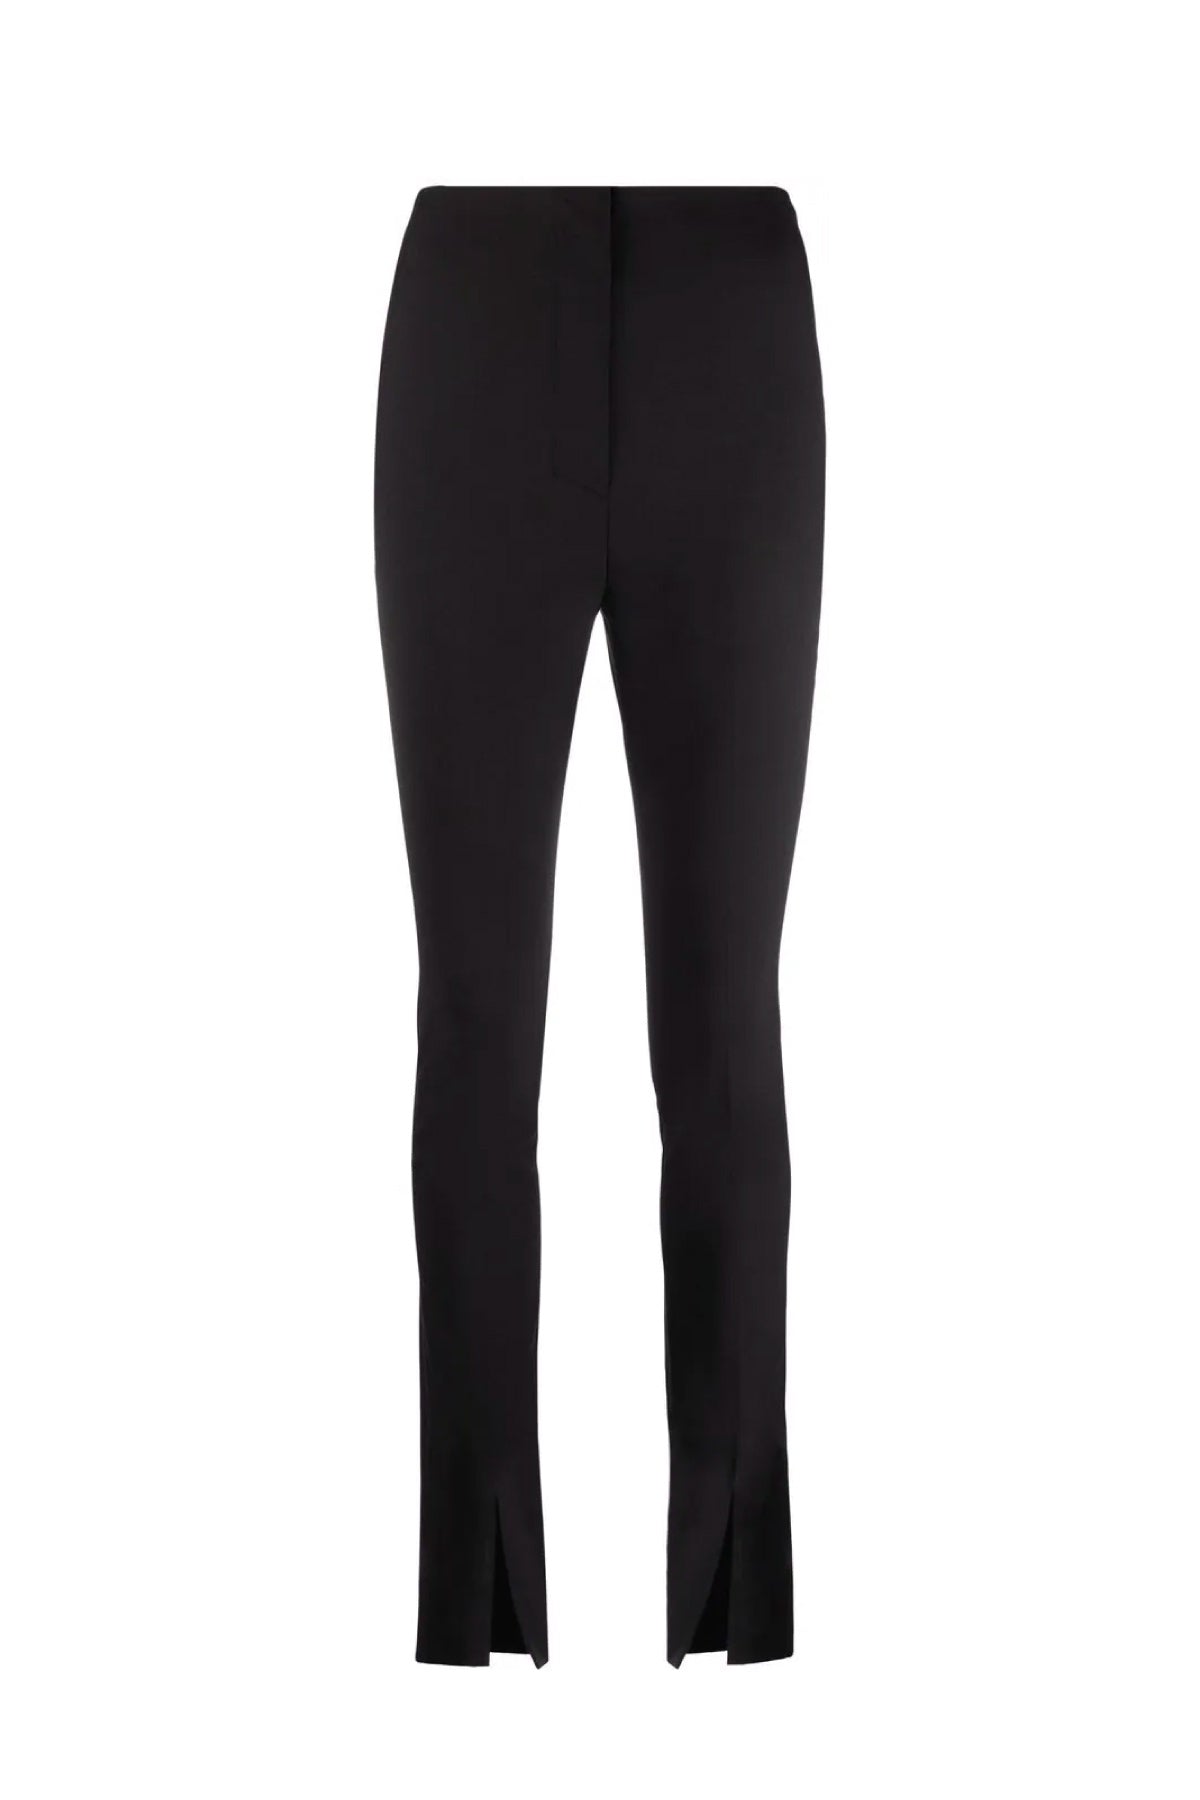 Nanushka Florine Tailored Slim Pant - Black